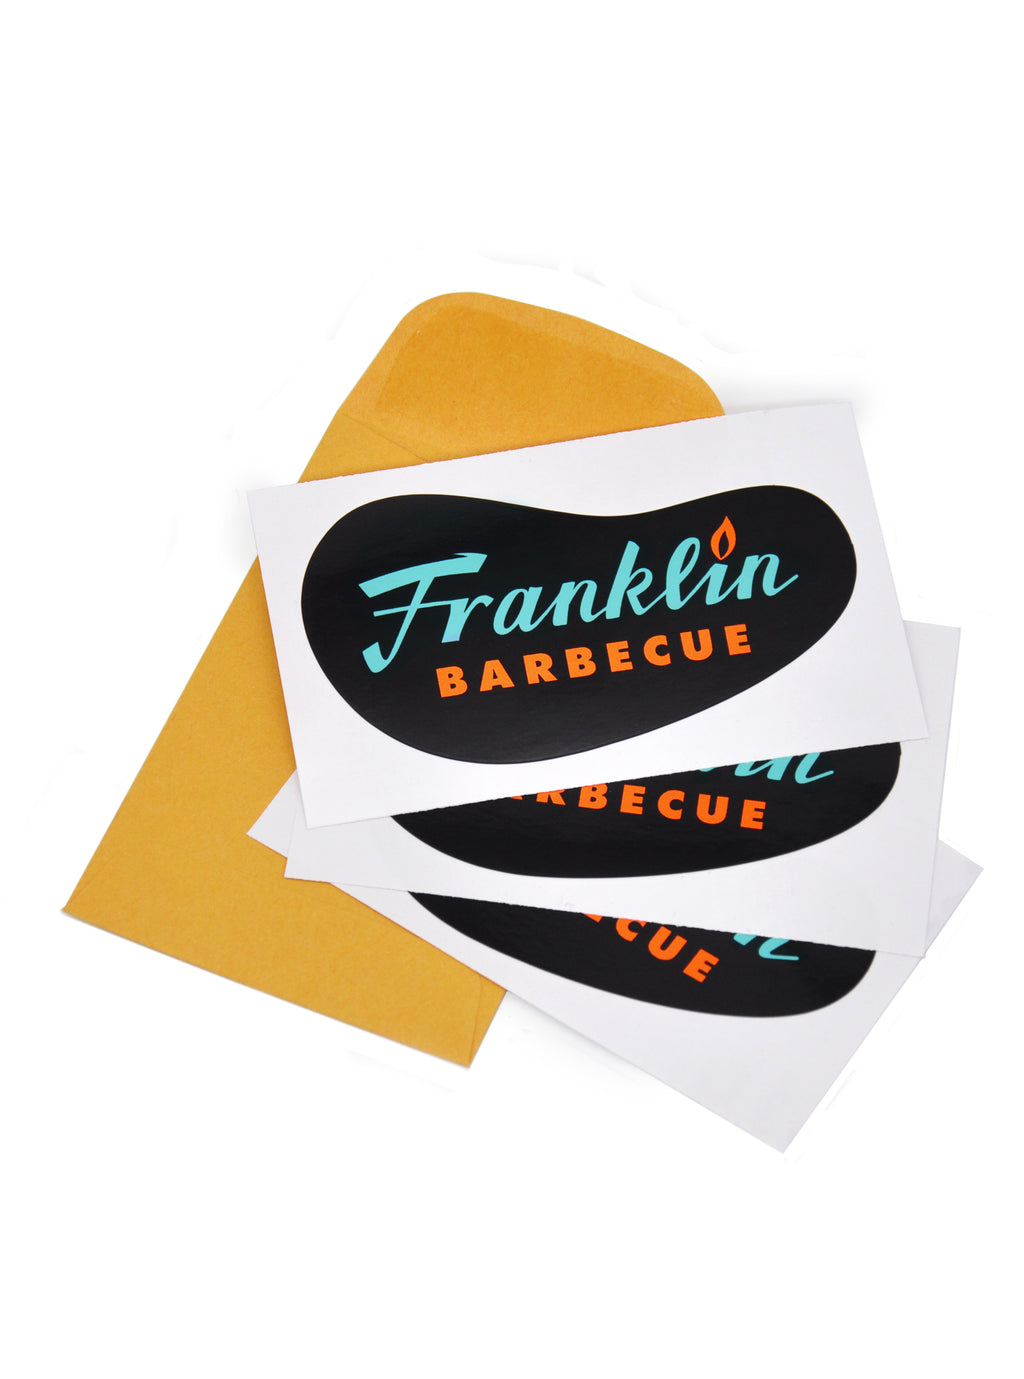 Franklin Yeti Roadie 24 – Franklin Barbecue